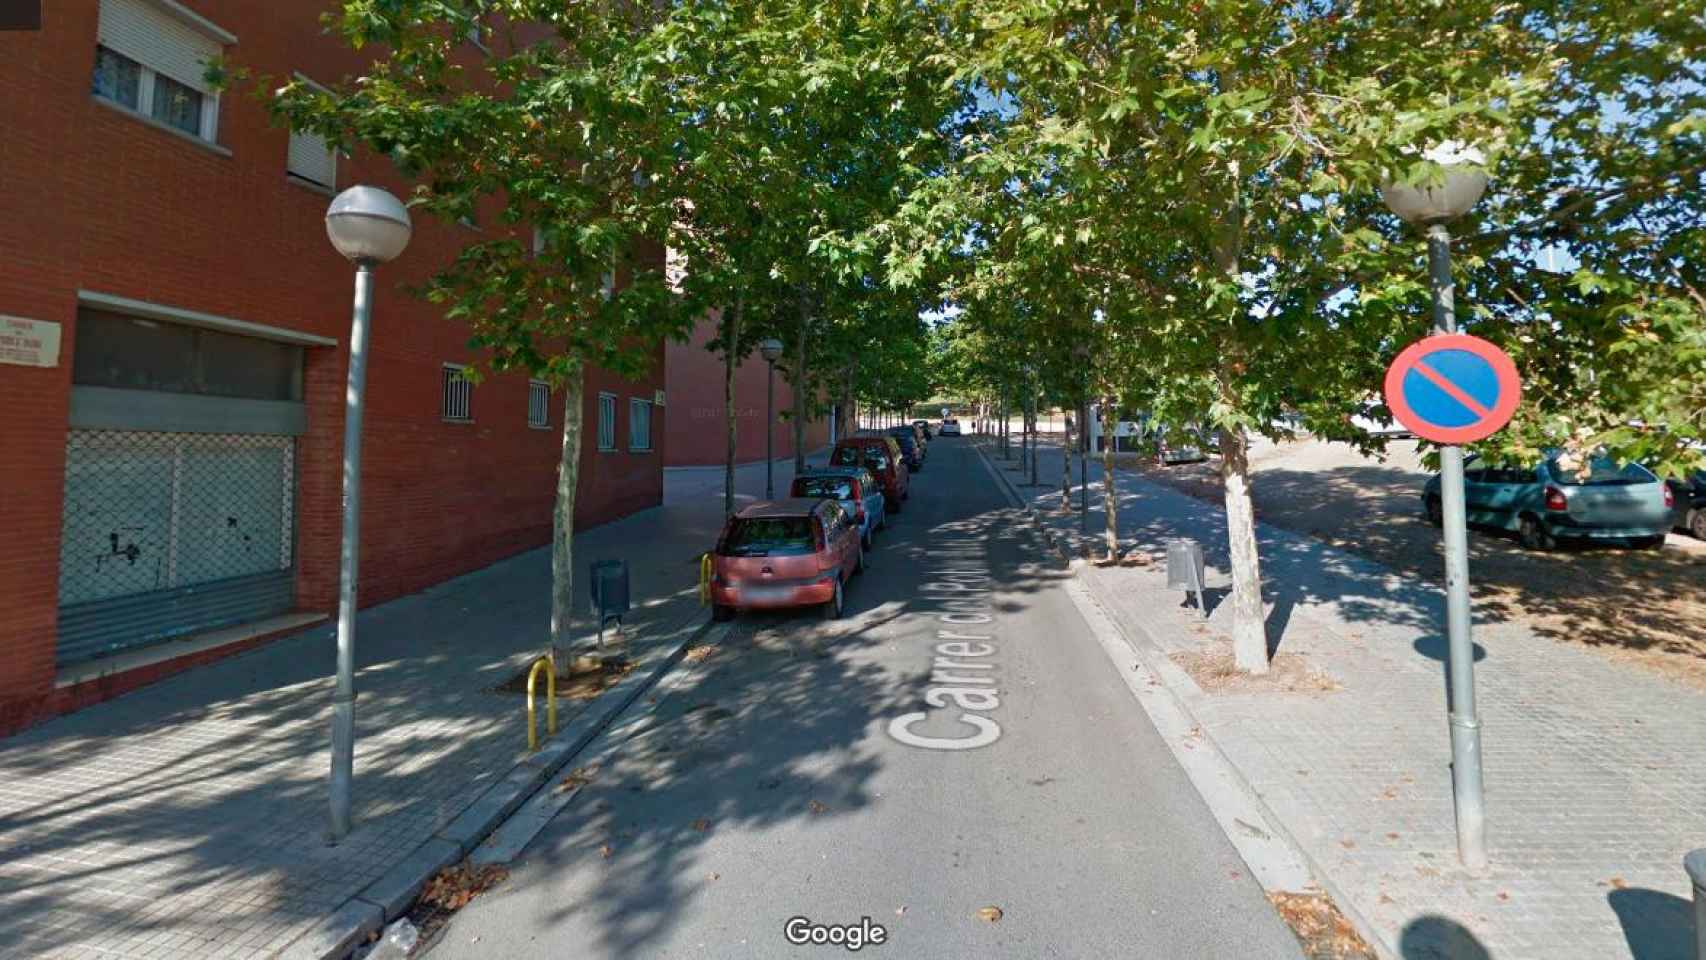 La corta calle Poble Bubi de Sabadell, donde se ha producido un homicidio / GOOGLE STREET VIEW